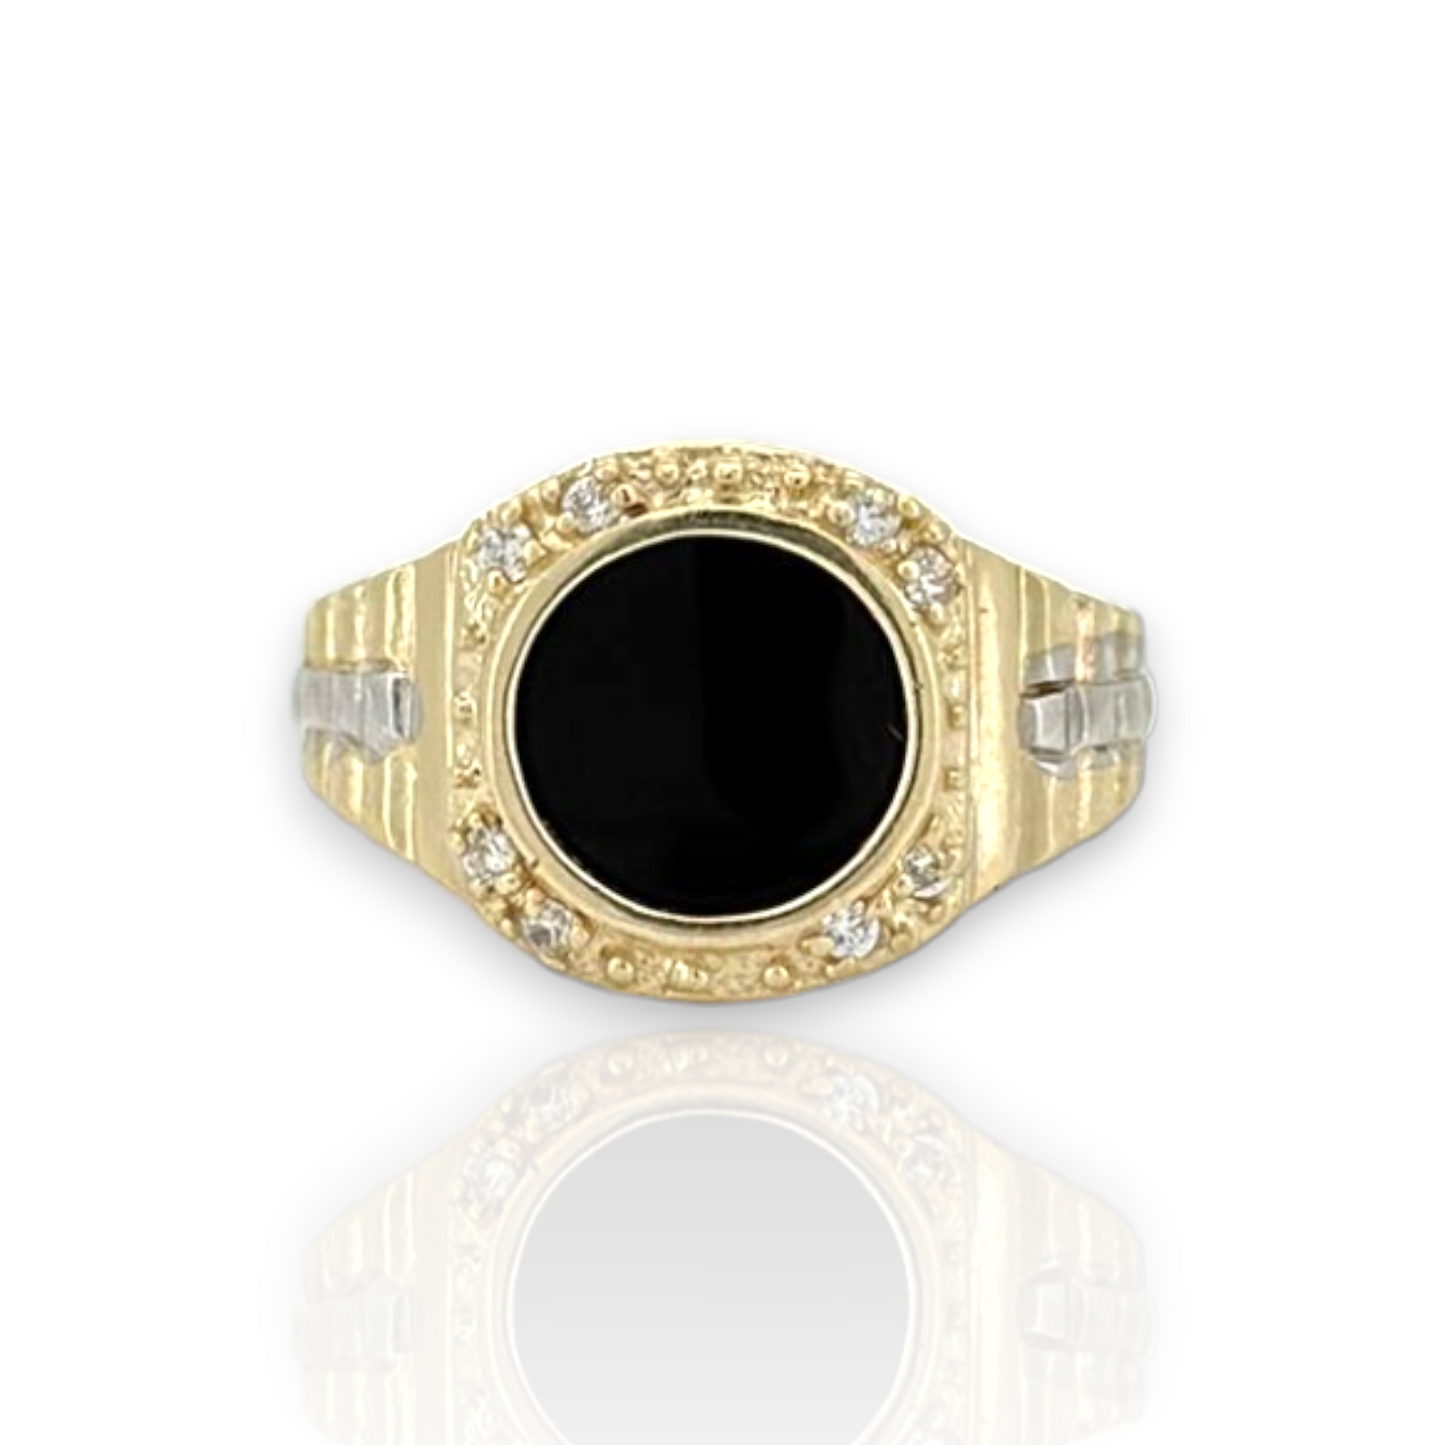 Railroad Round CZ Black Onyx Signet Ring - 10K Yellow Gold